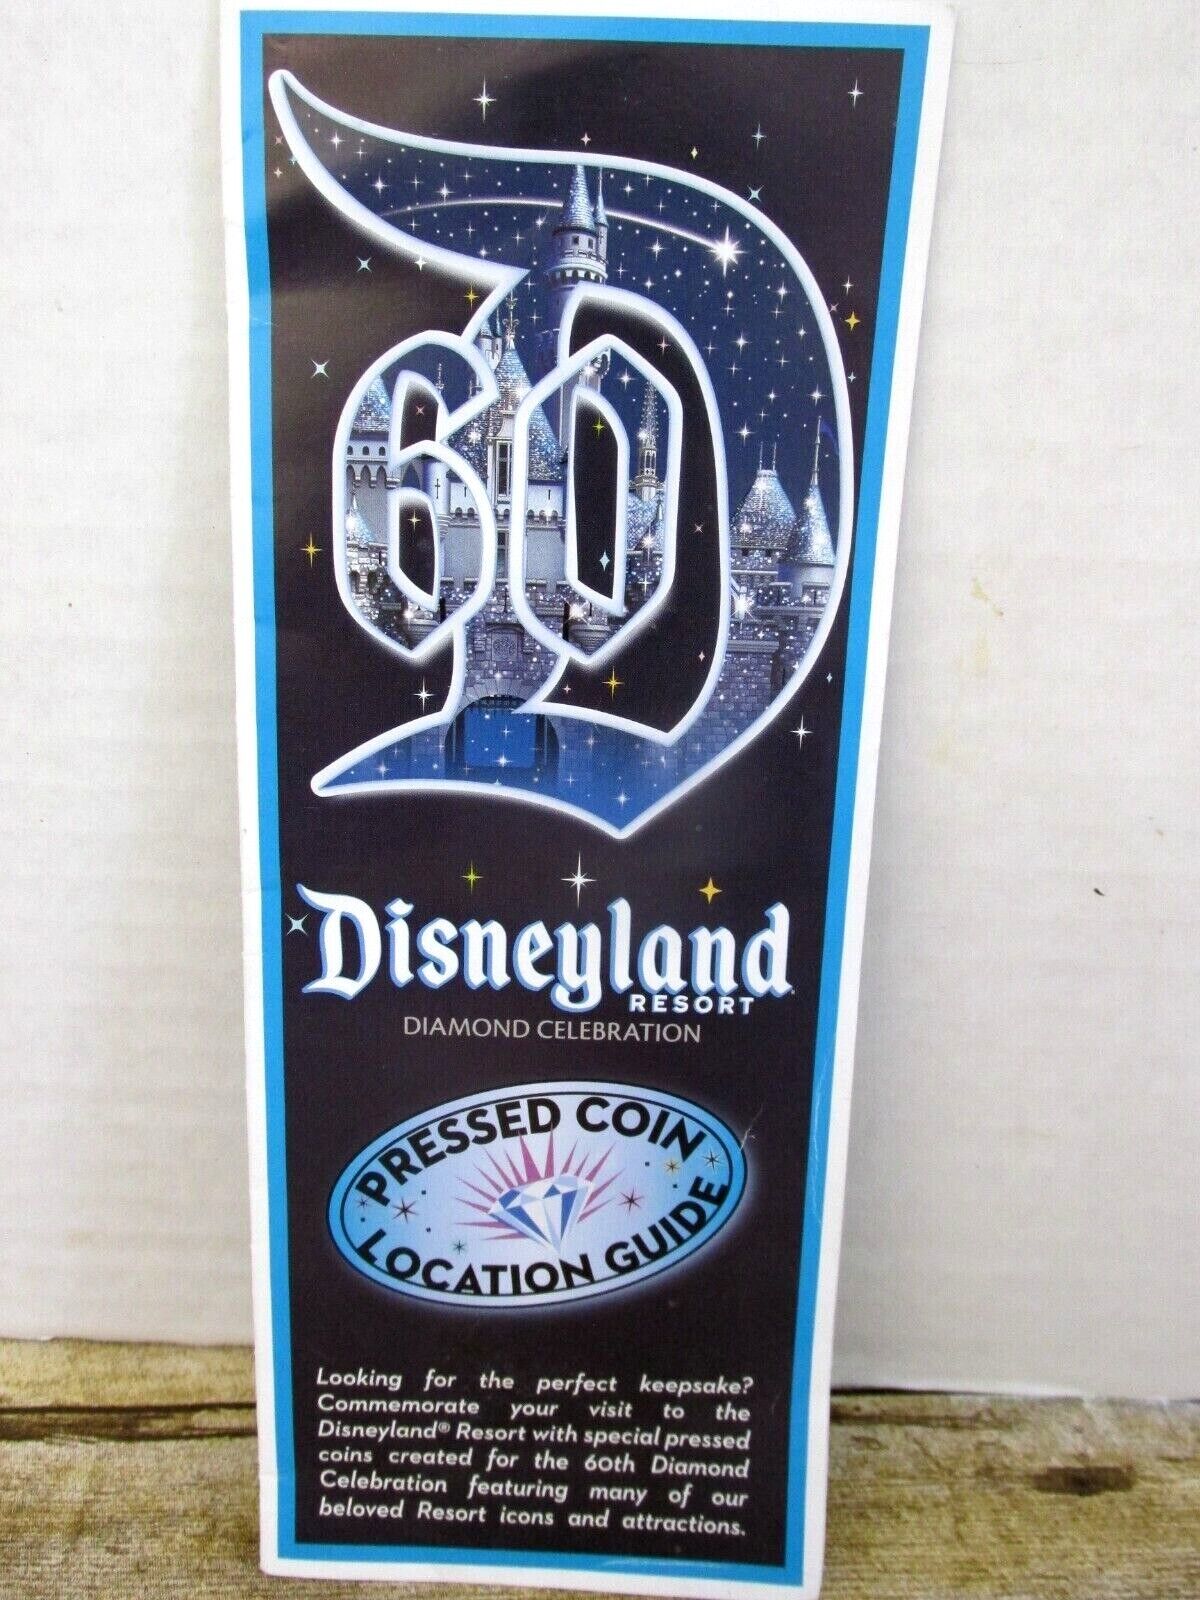 Disneyland Diamond Celebration Pressed Coin Location Guide 60th Anniversary DLR